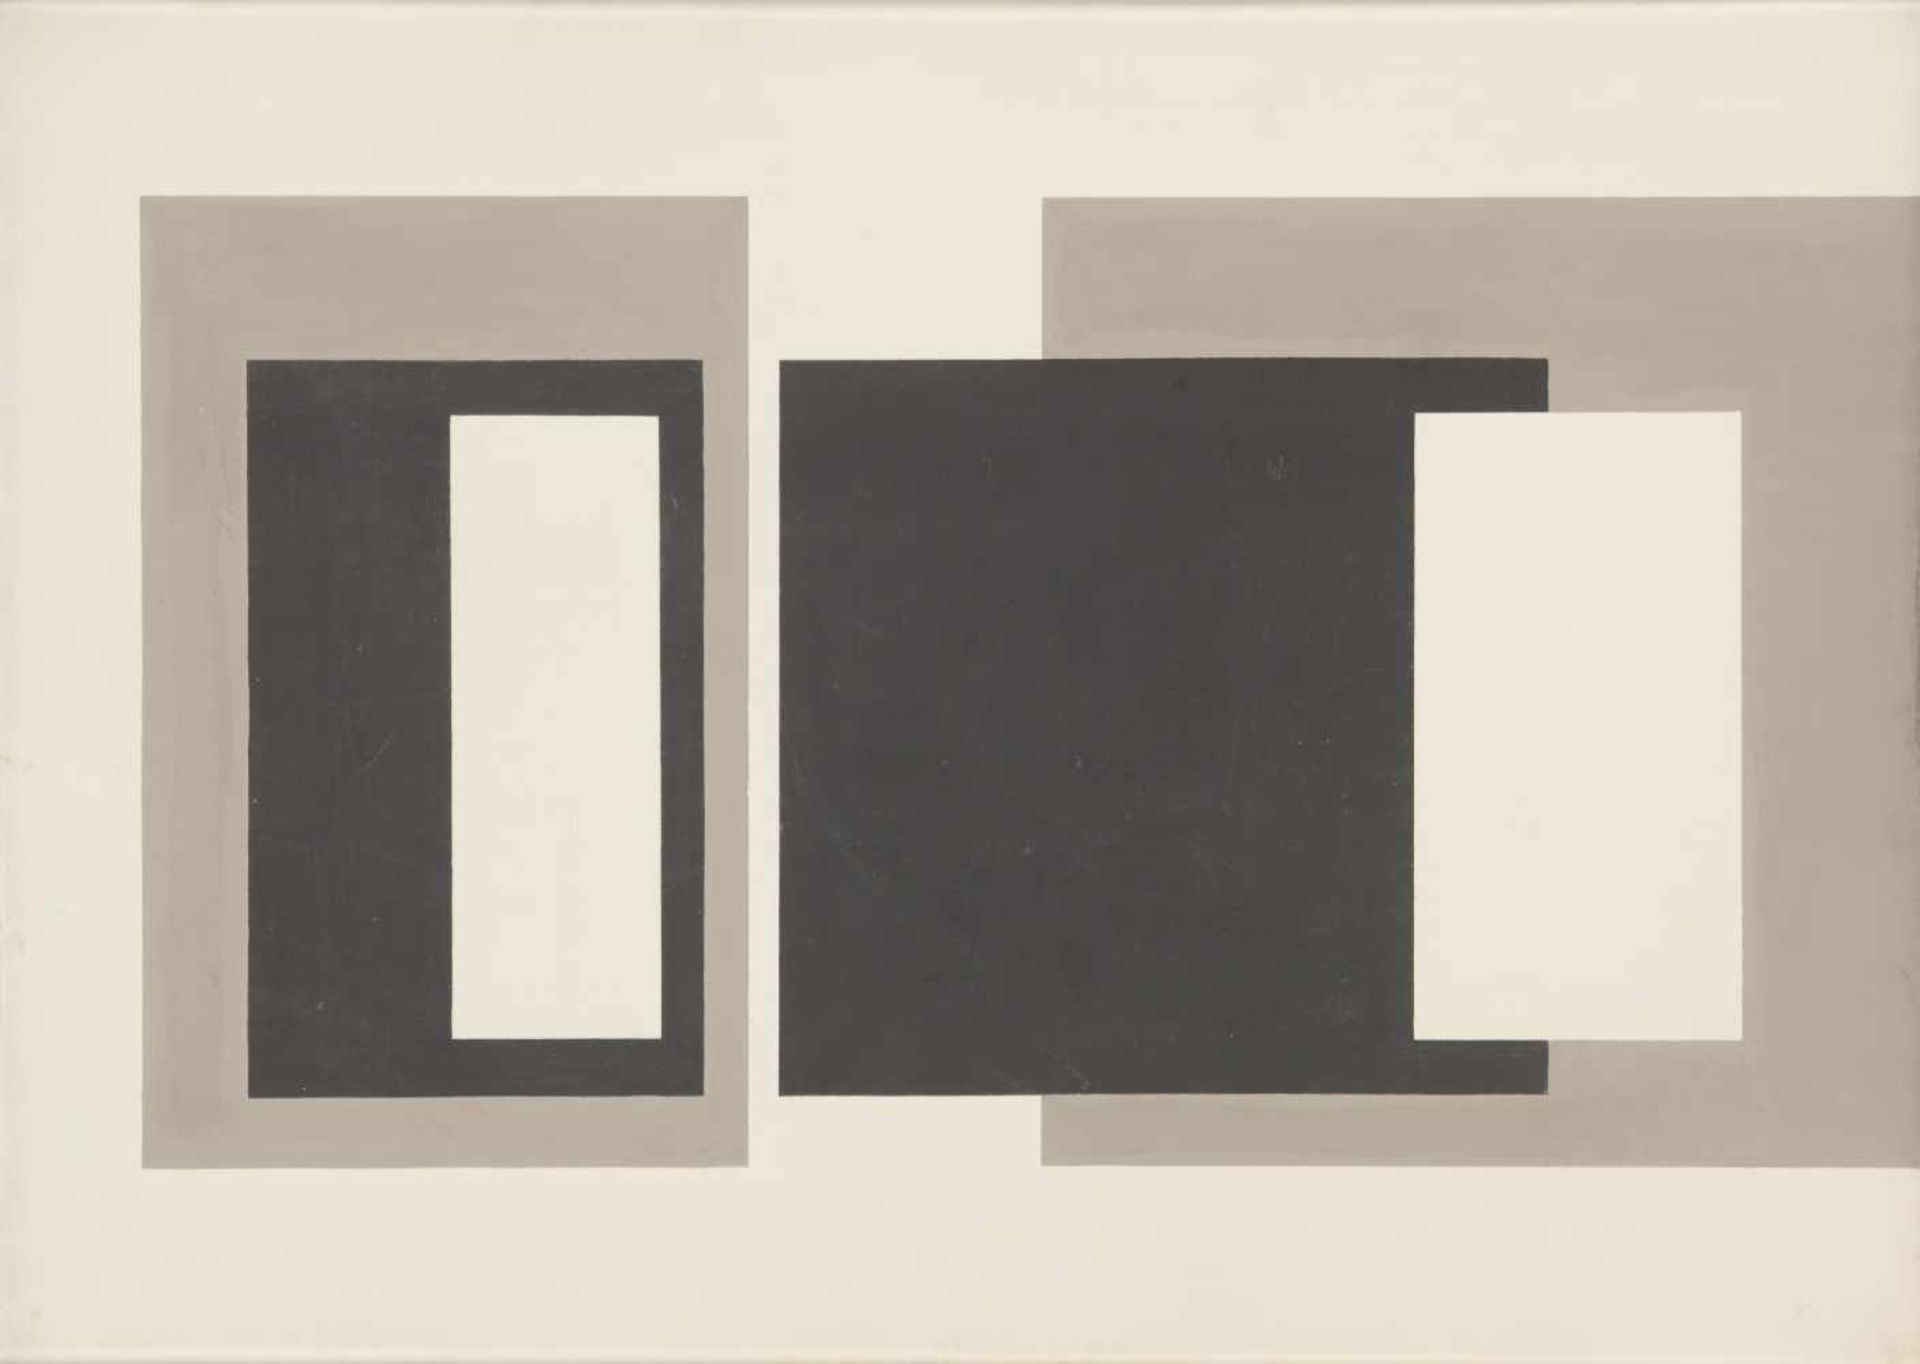 Ettore Colla (Parma 1896 - Roma 1968)Ohne Titel, 1950;Tempera auf Leinwand, 50 x 70 cm, verso